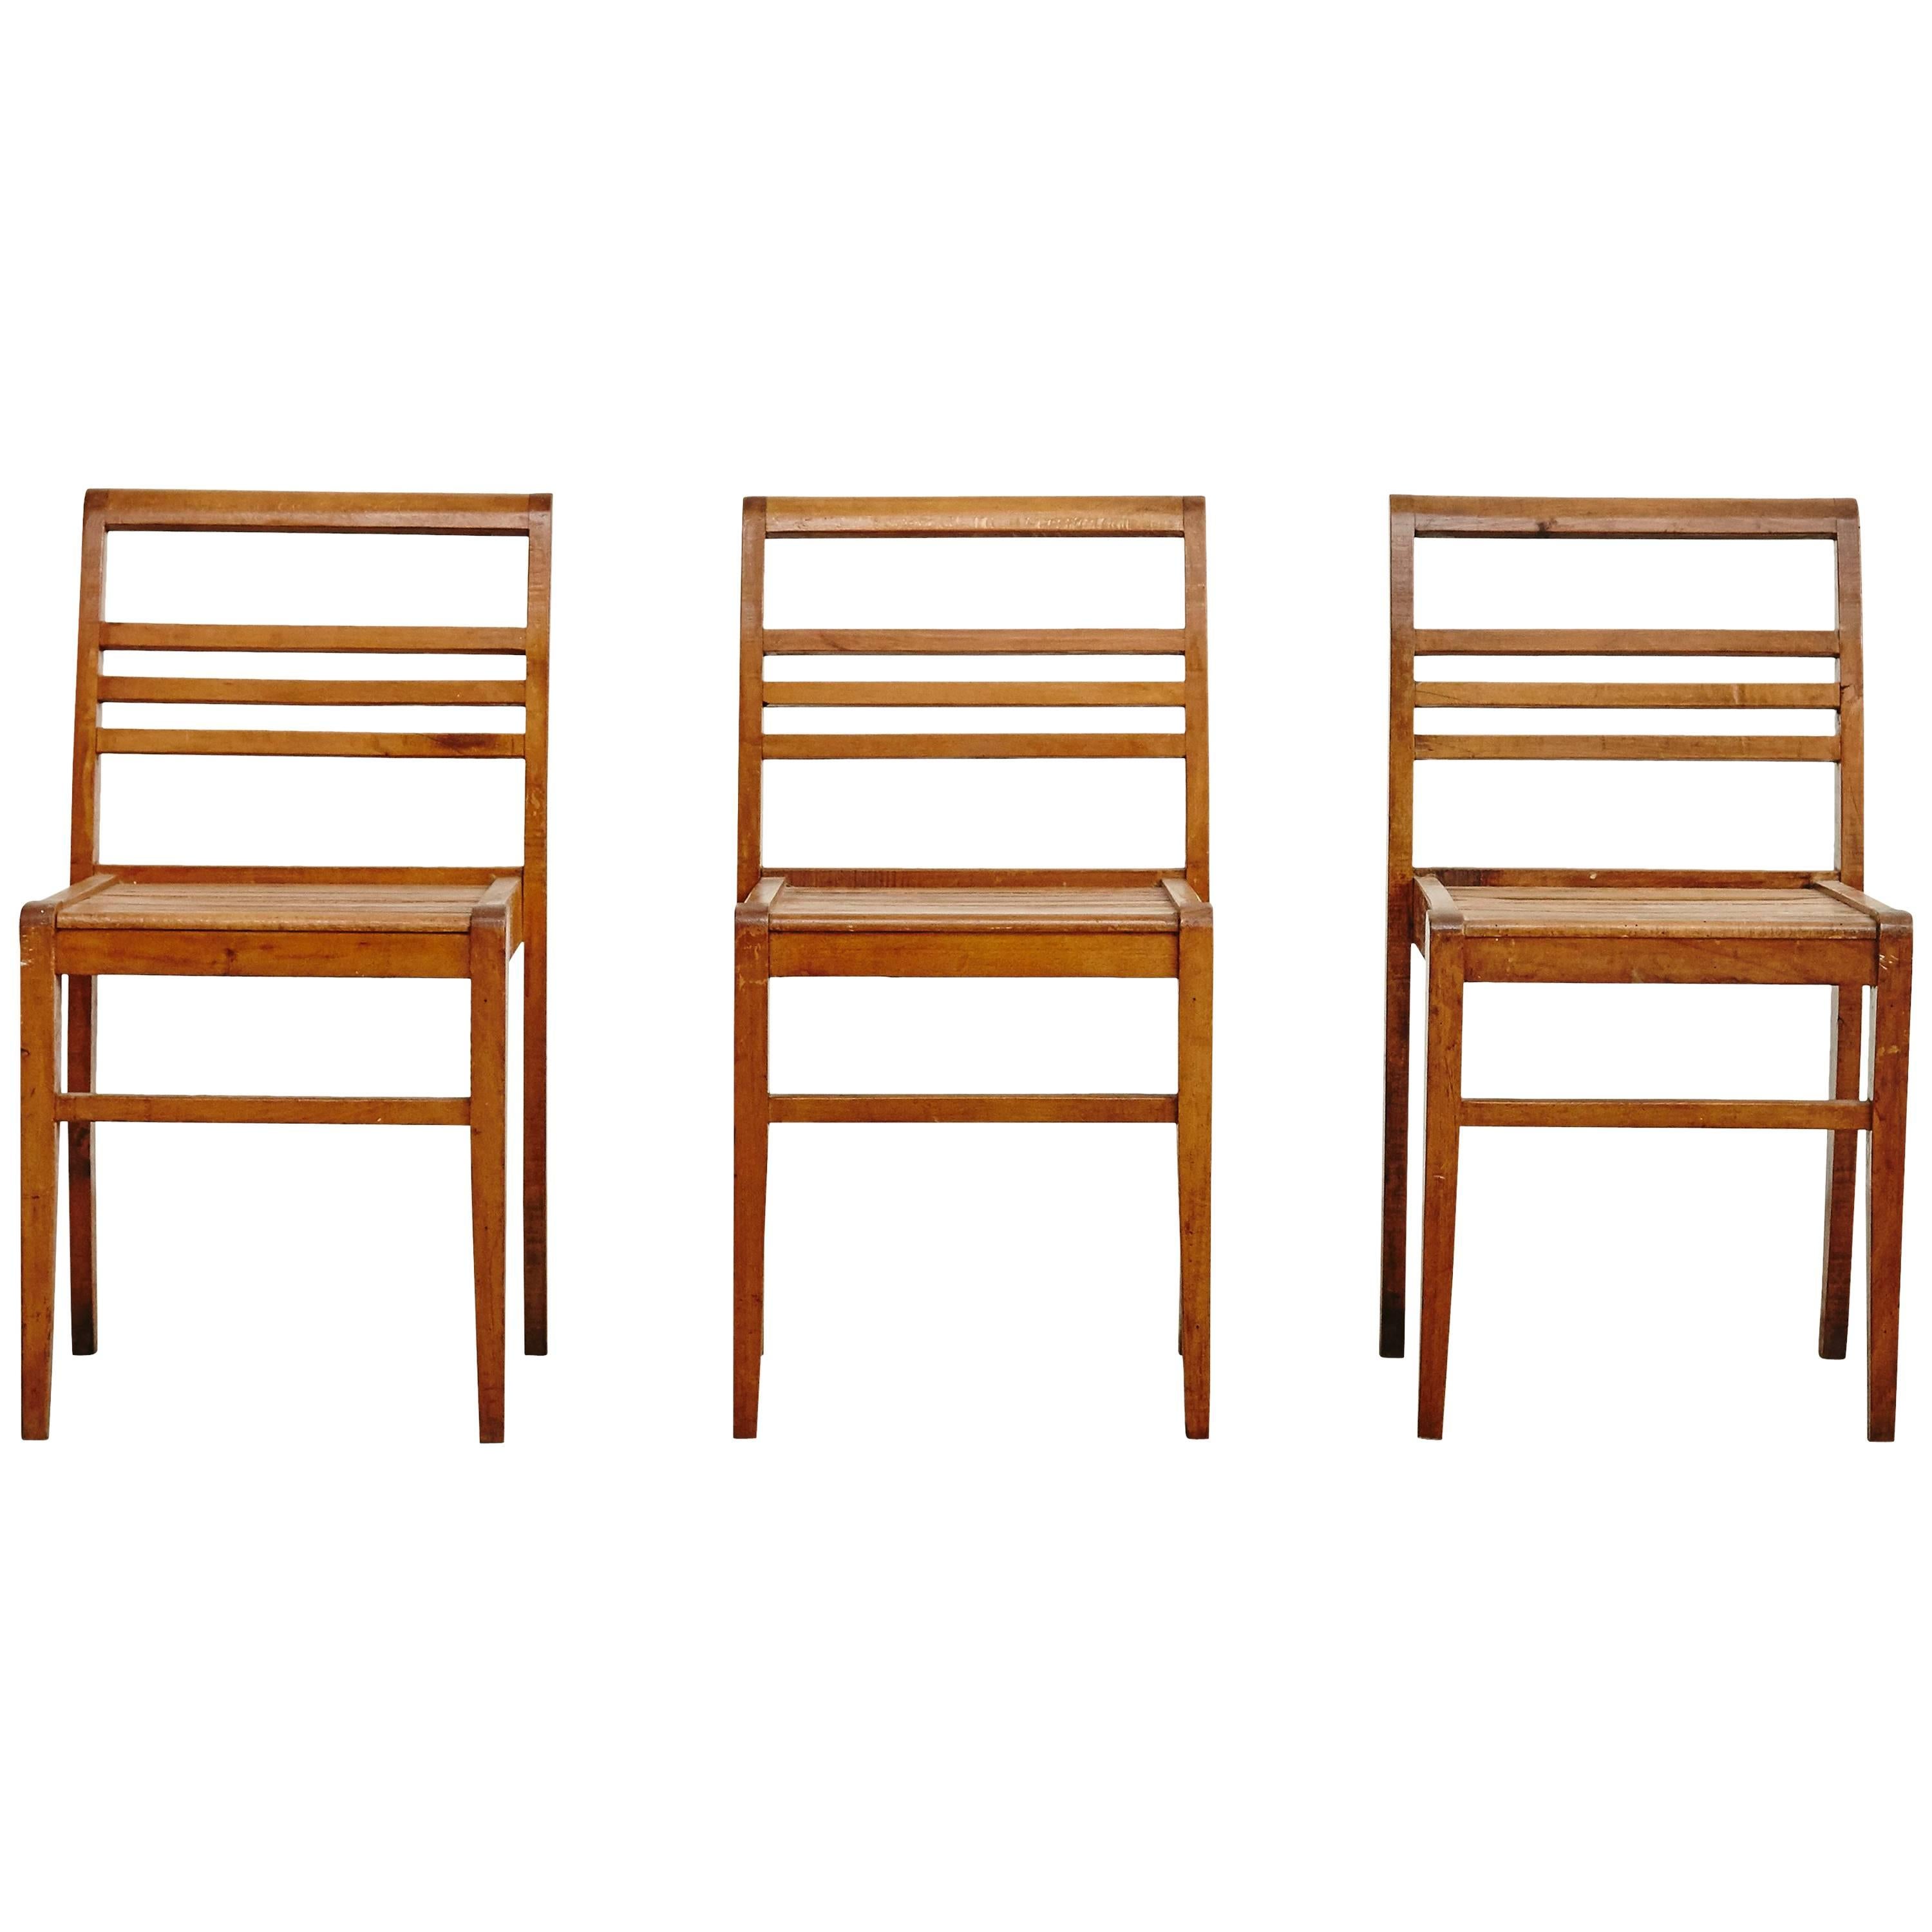 Set of Three Chairs by Rene Gabriel, circa 1940